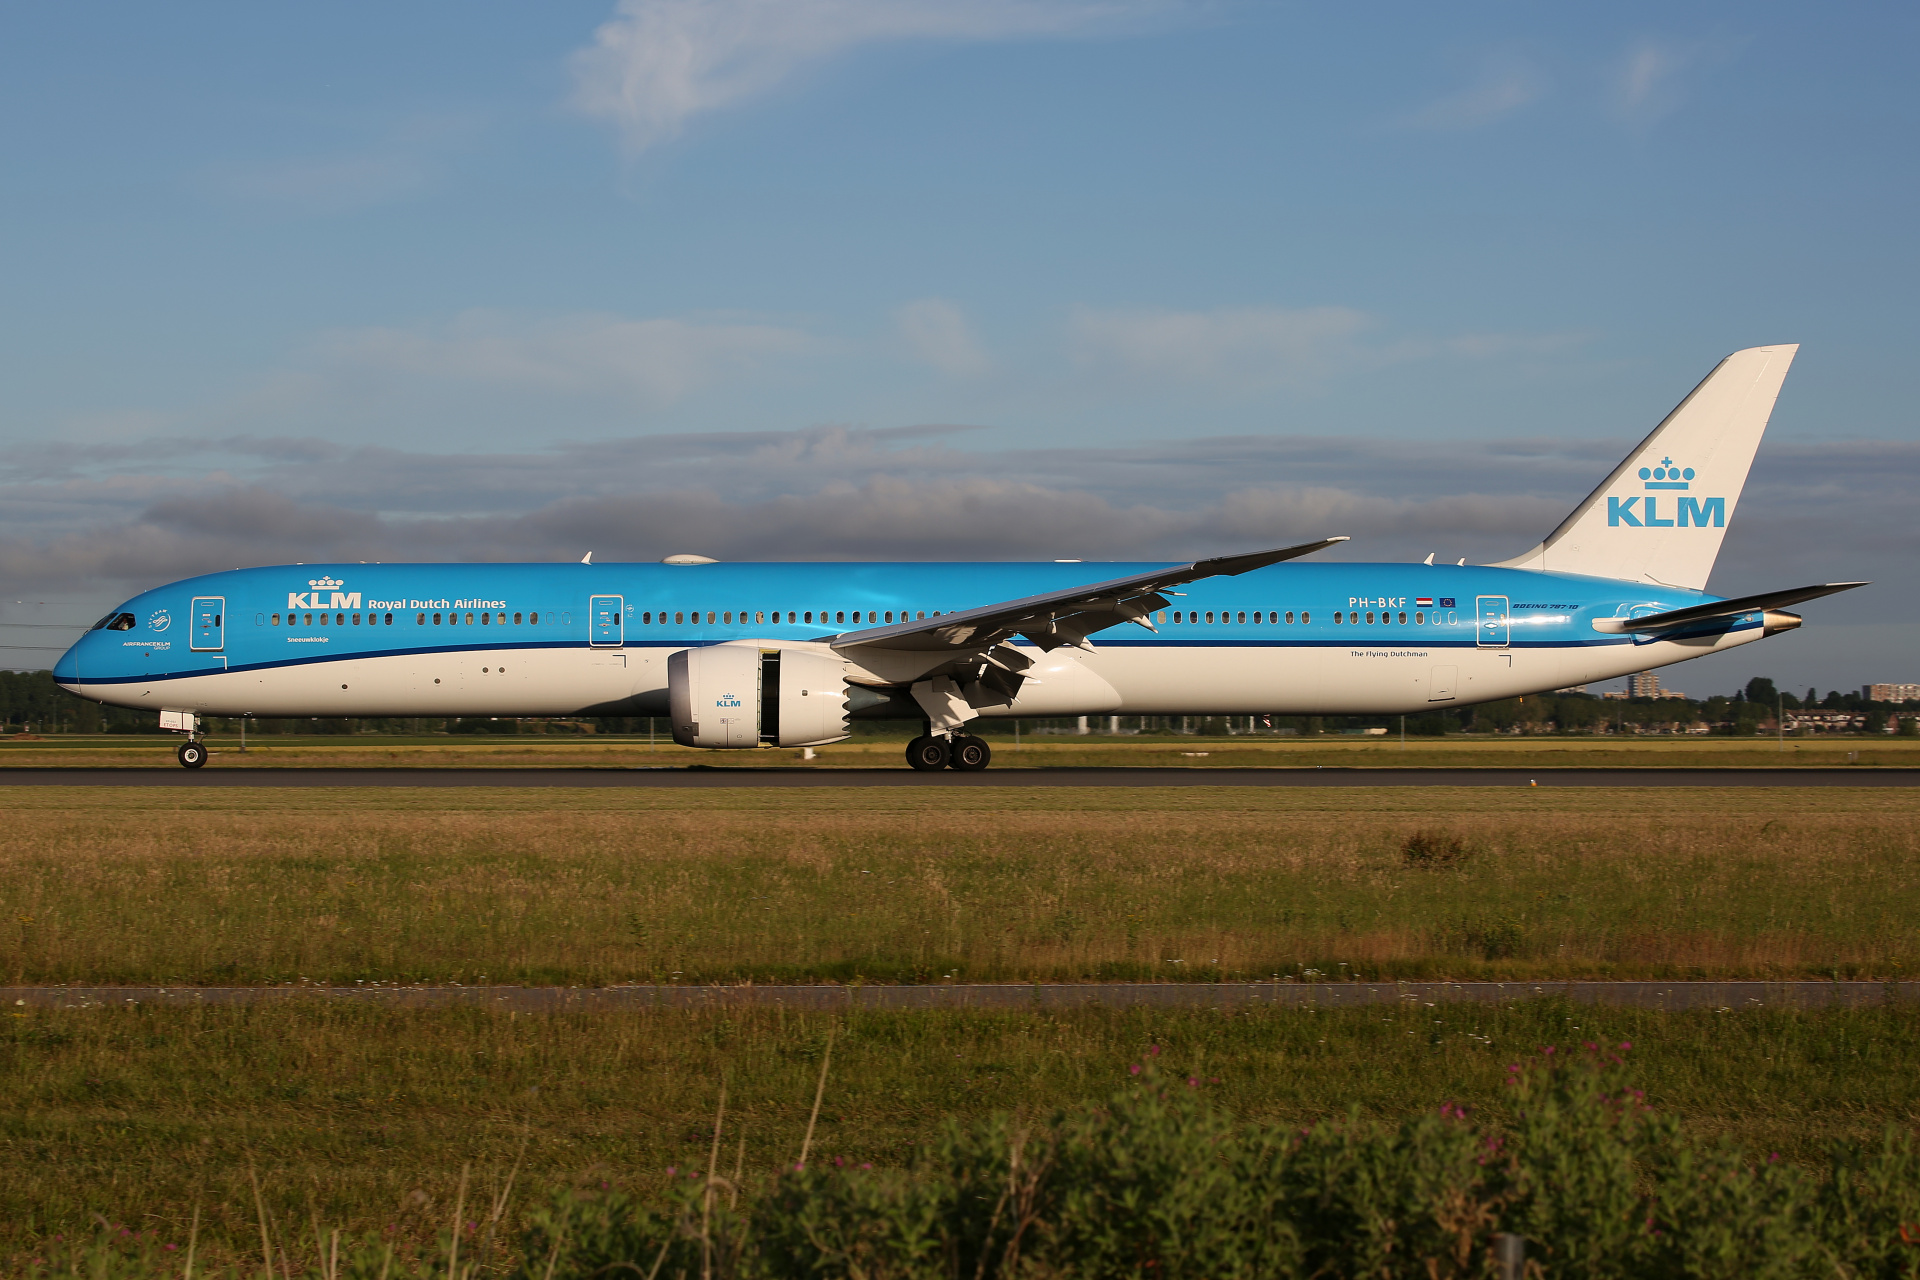 PH-BKF, KLM Royal Dutch Airlines (Aircraft » Schiphol Spotting » Boeing 787-10 Dreamliner)